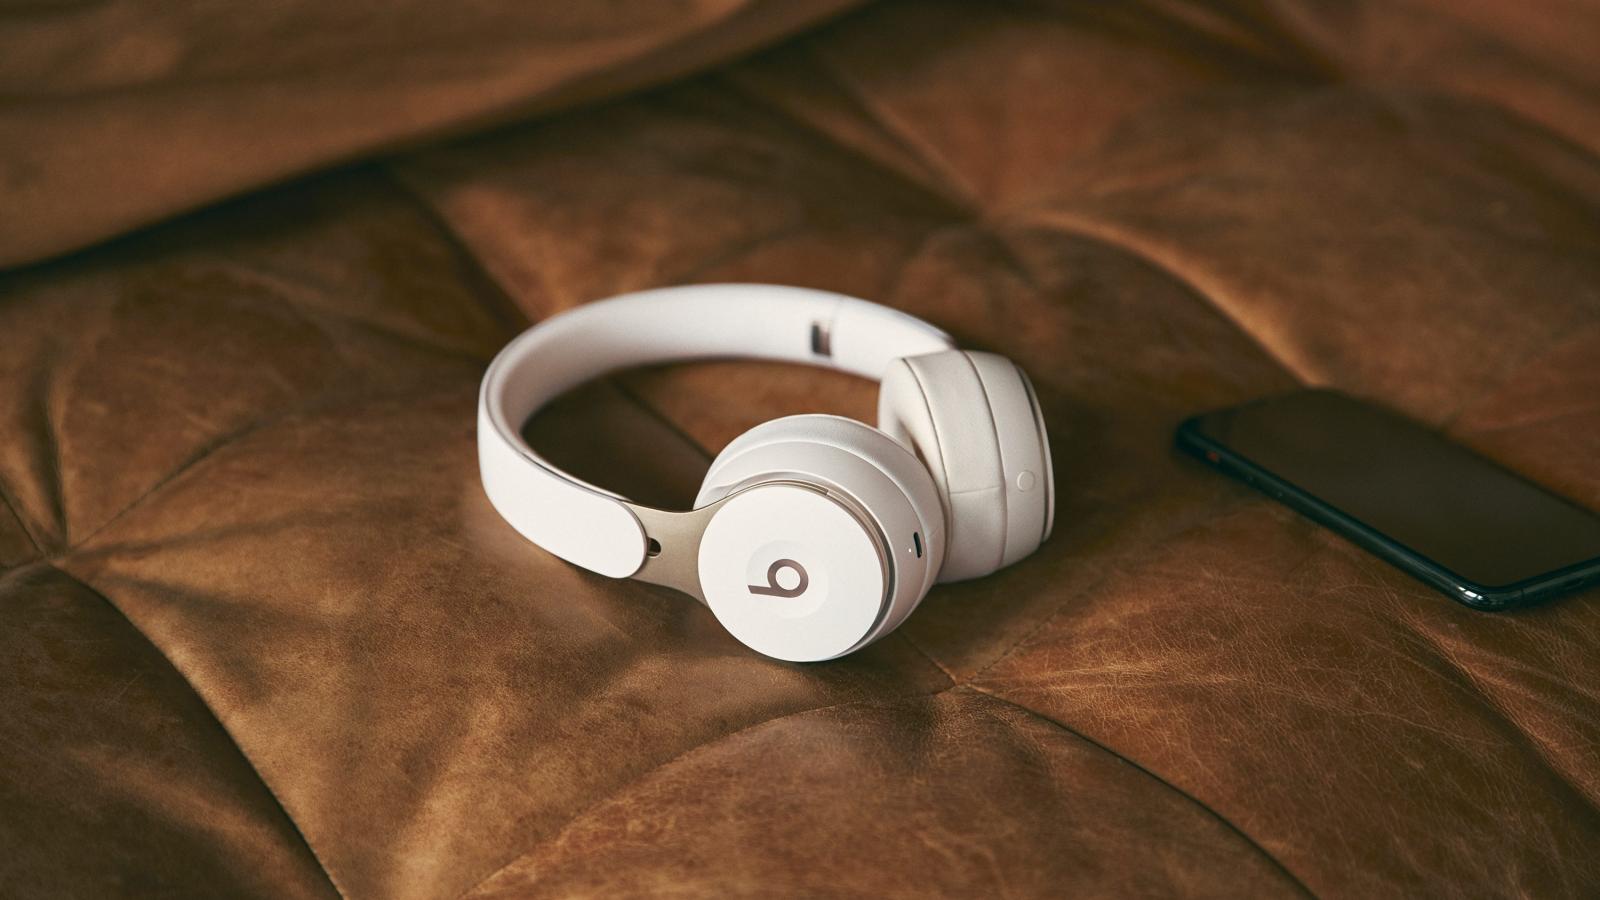 Beats Solo Pro are basically Apple headphones